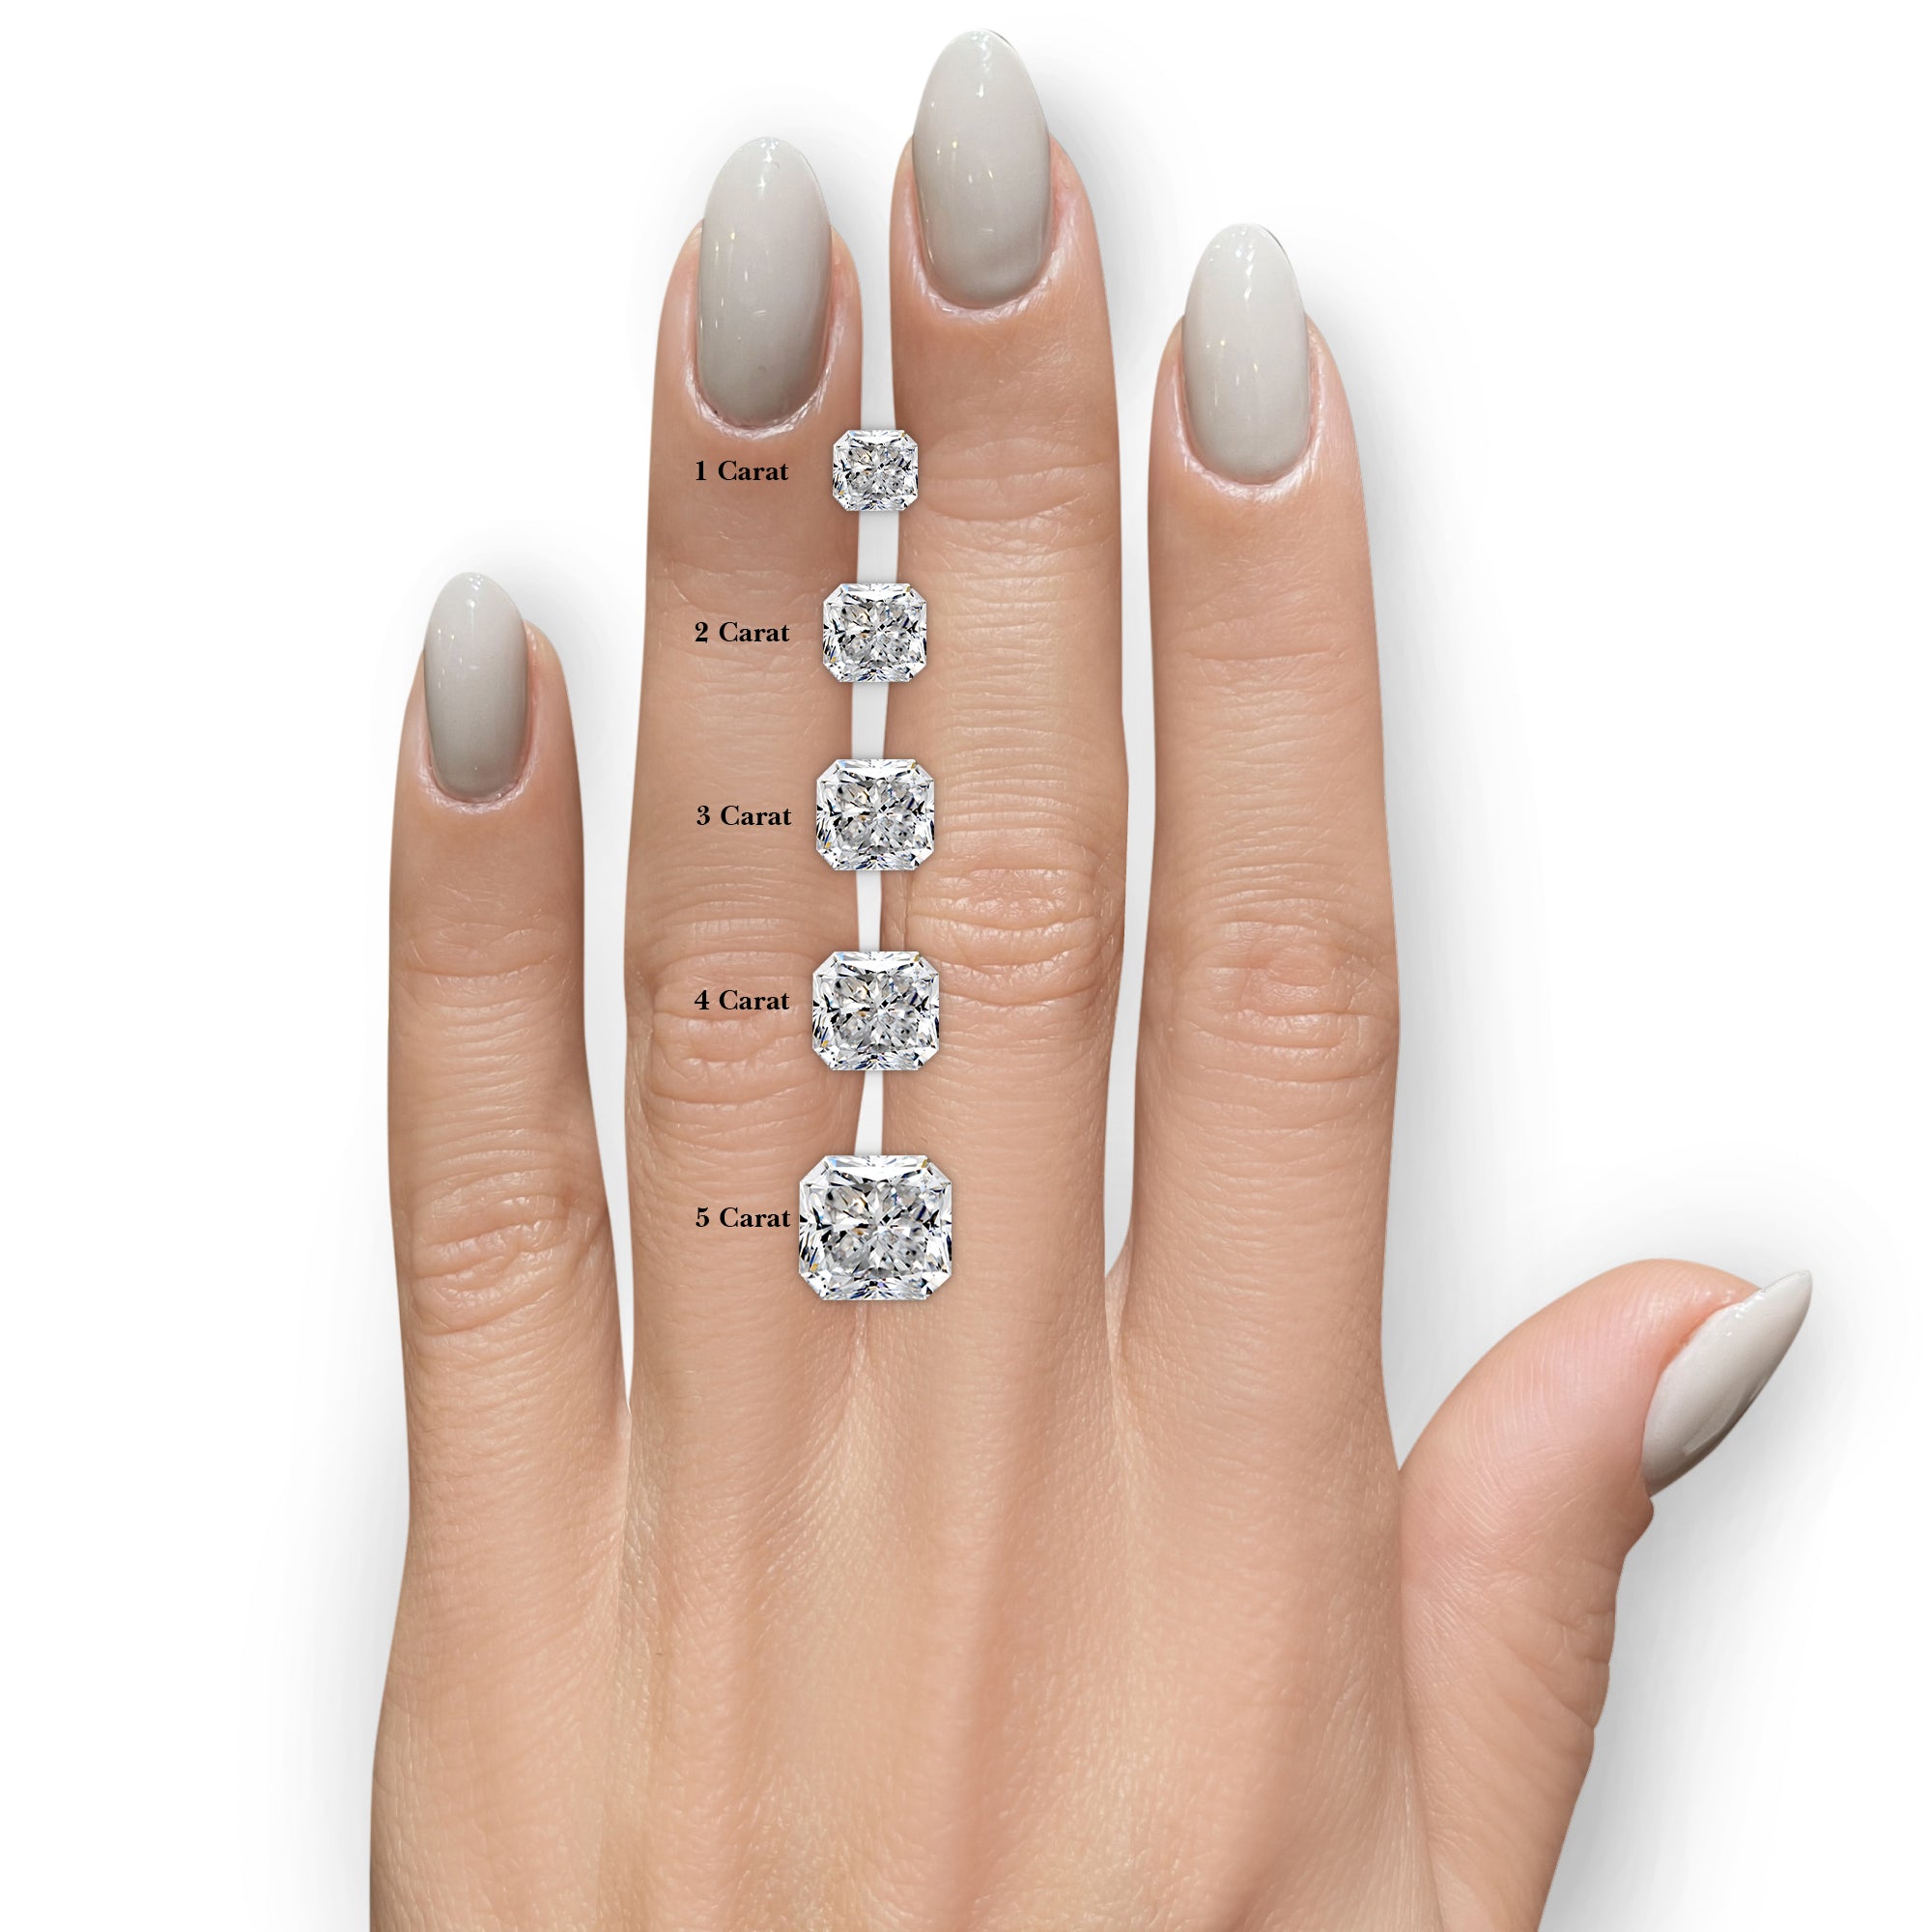 Milly Diamond Engagement Ring -14K White Gold